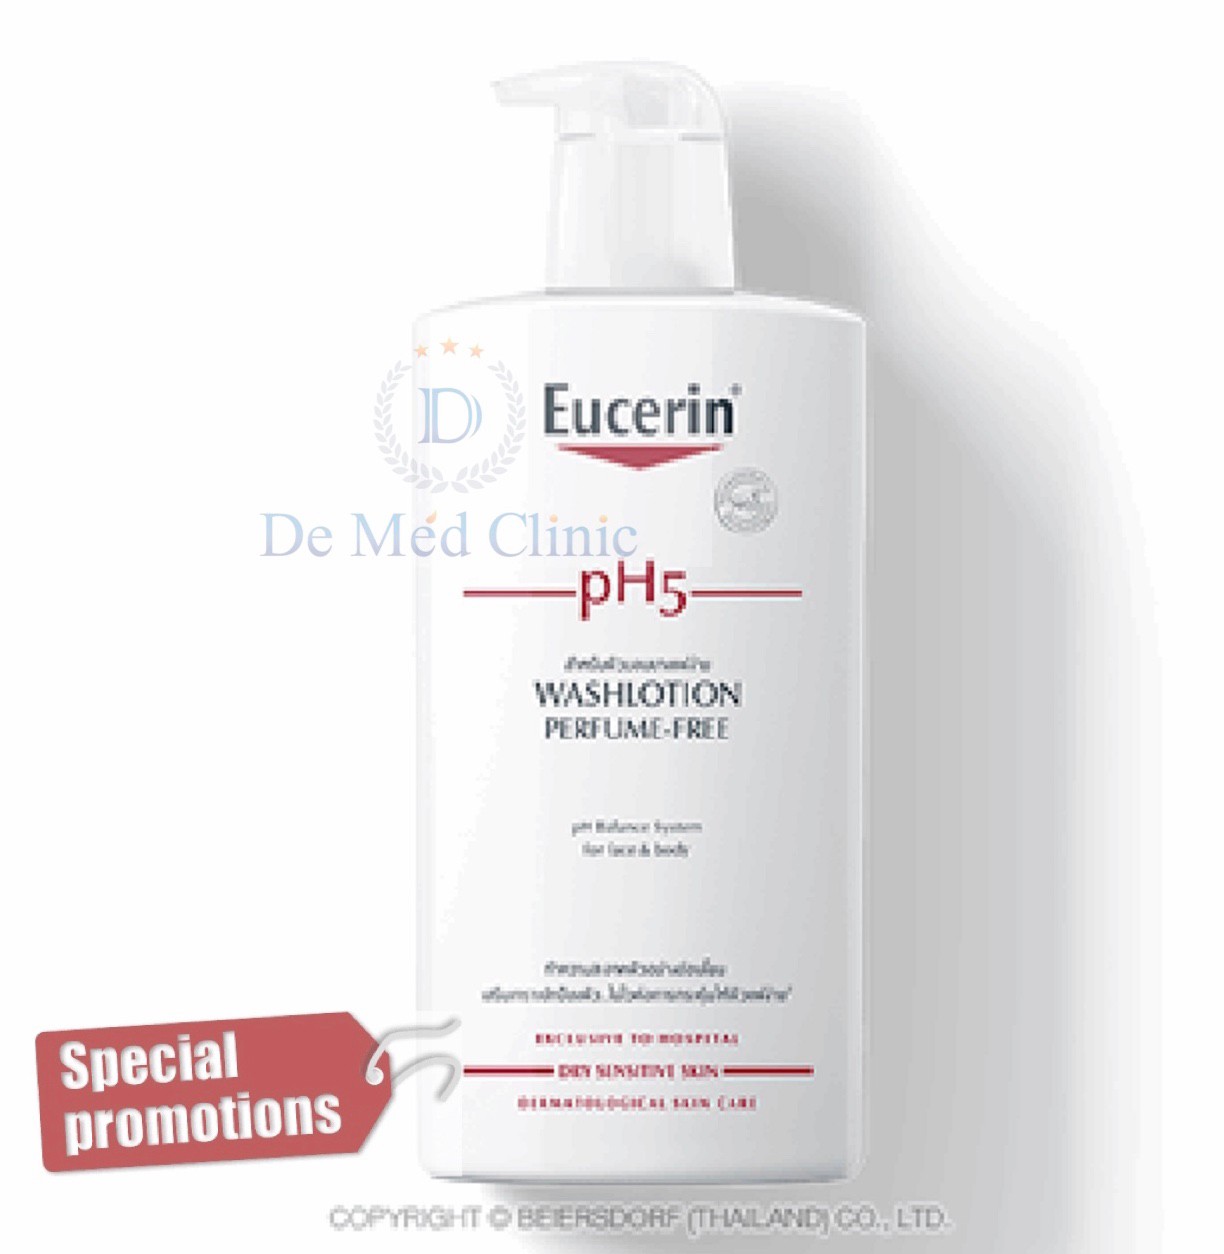 Eucerin pH5 Washlotion Perfume Free 400 ml ยูเซอริน พีเอส 5 วอชโลชั่น เพอร์ฟูมฟรี ผลิตภัณฑ์ทำความสะอาดผิว สำหรับผิวแห้ง บอบบาง แพ้ง่ายเป็นพิเศษ De Med Clinic